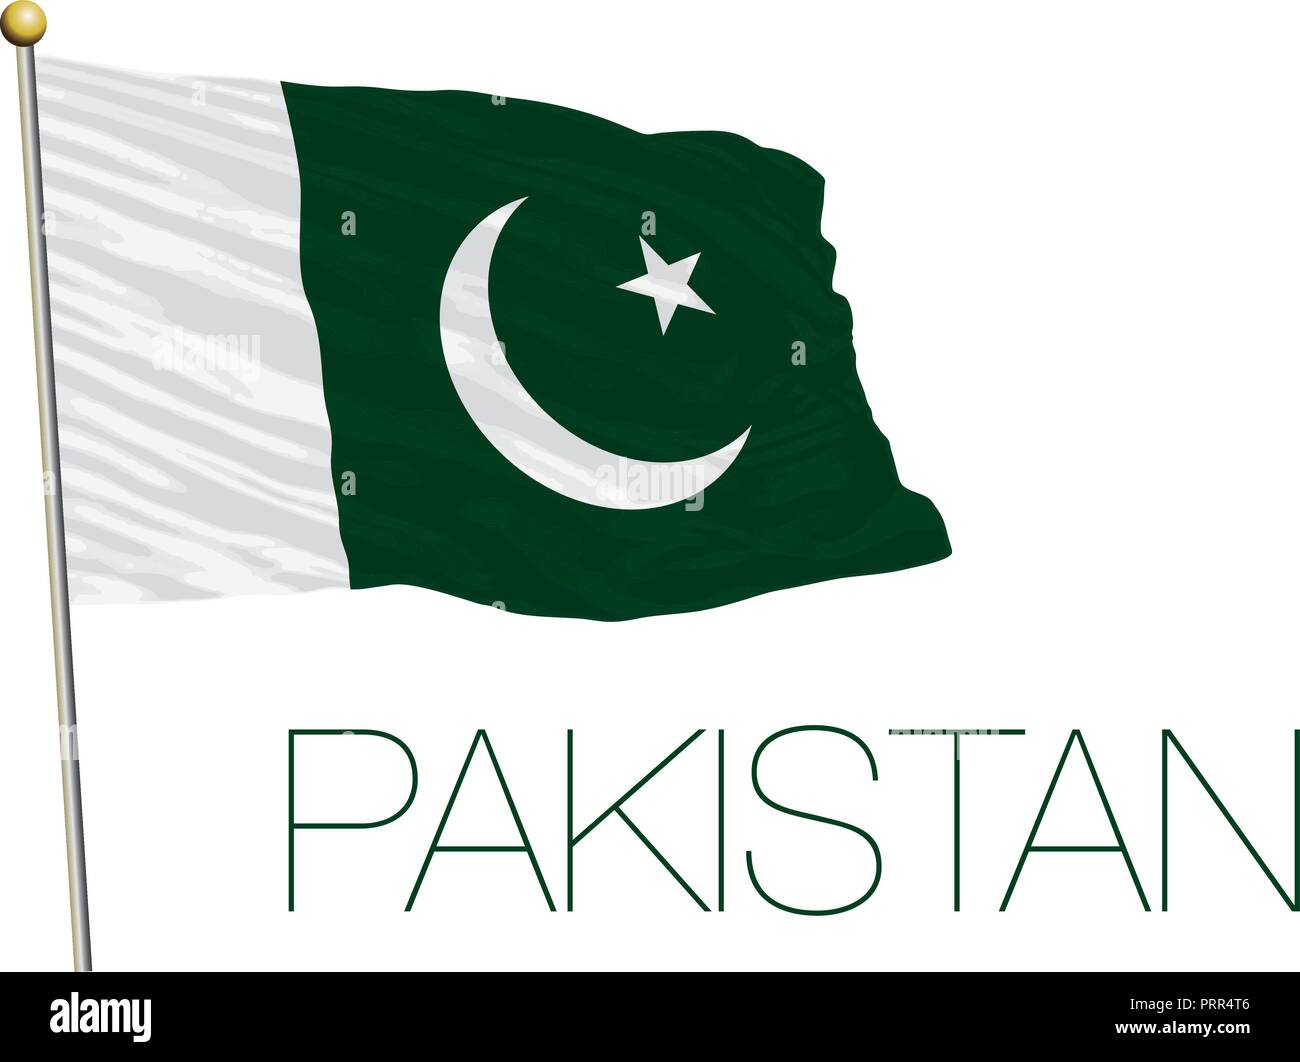 Pakistan official flag, vector illustration Stock Vector